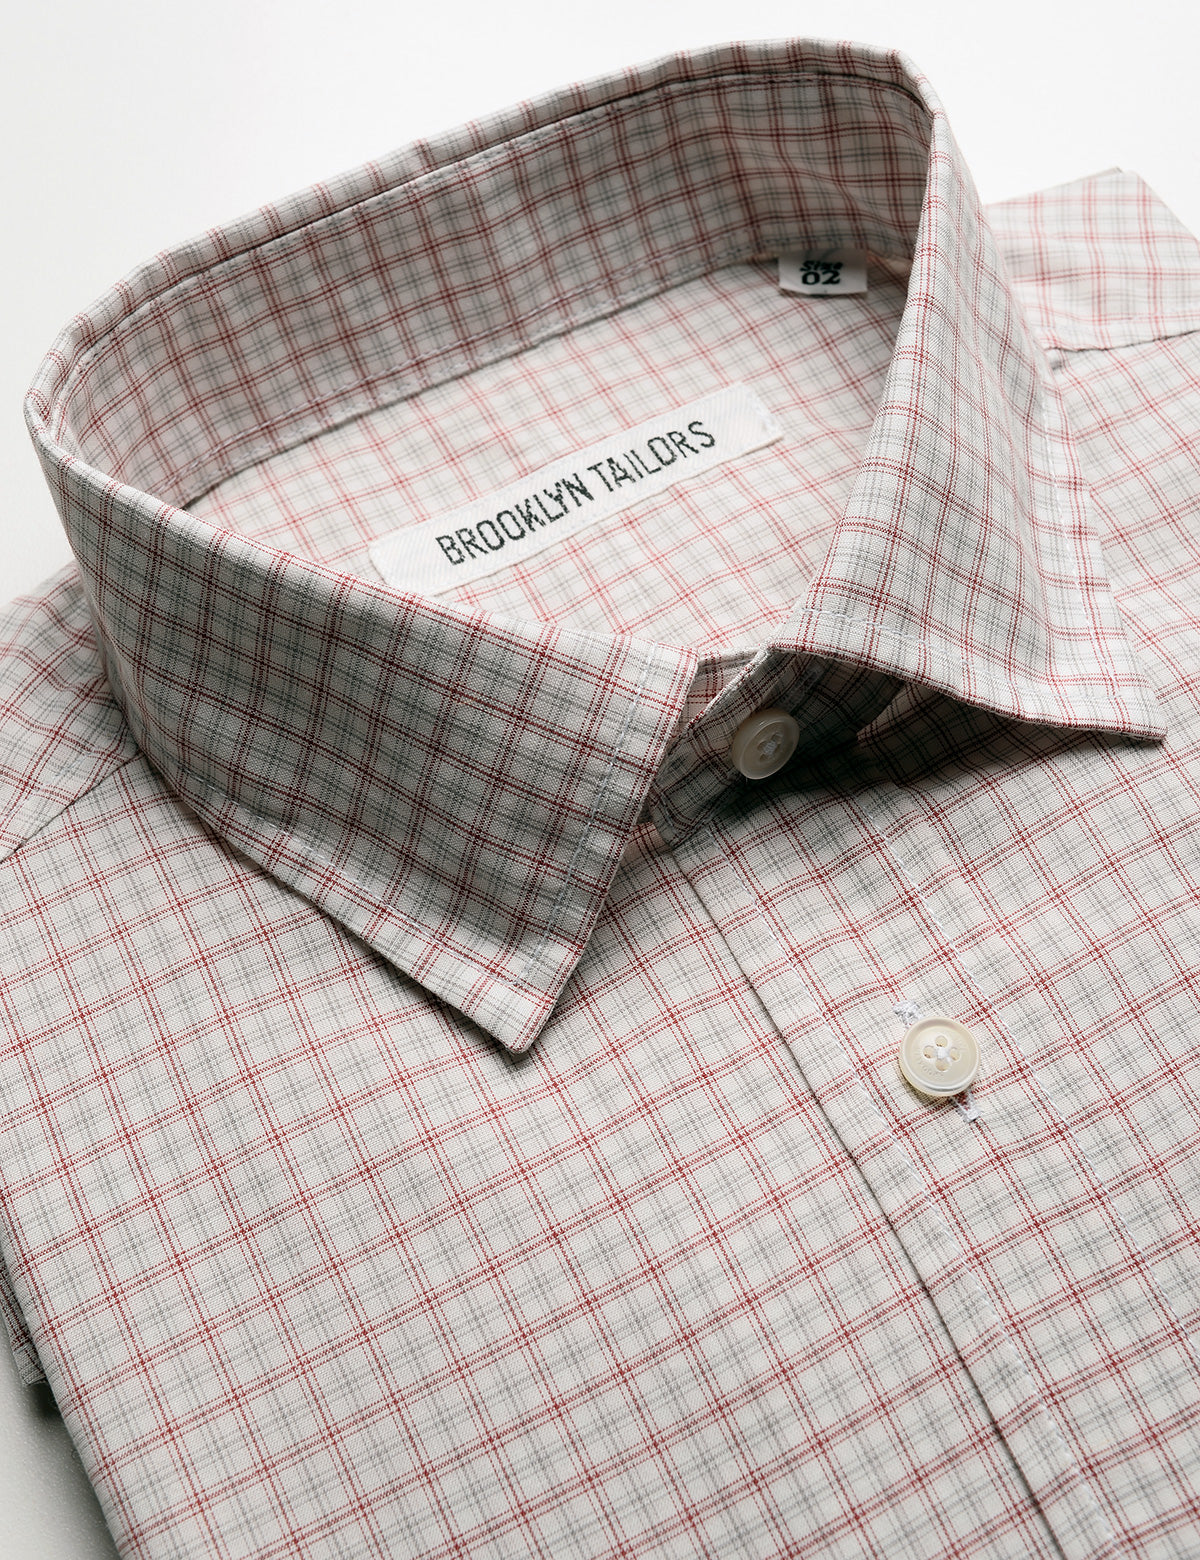 BKT20 Slim Dress Shirt in Micro Grid - White / Red / Gray